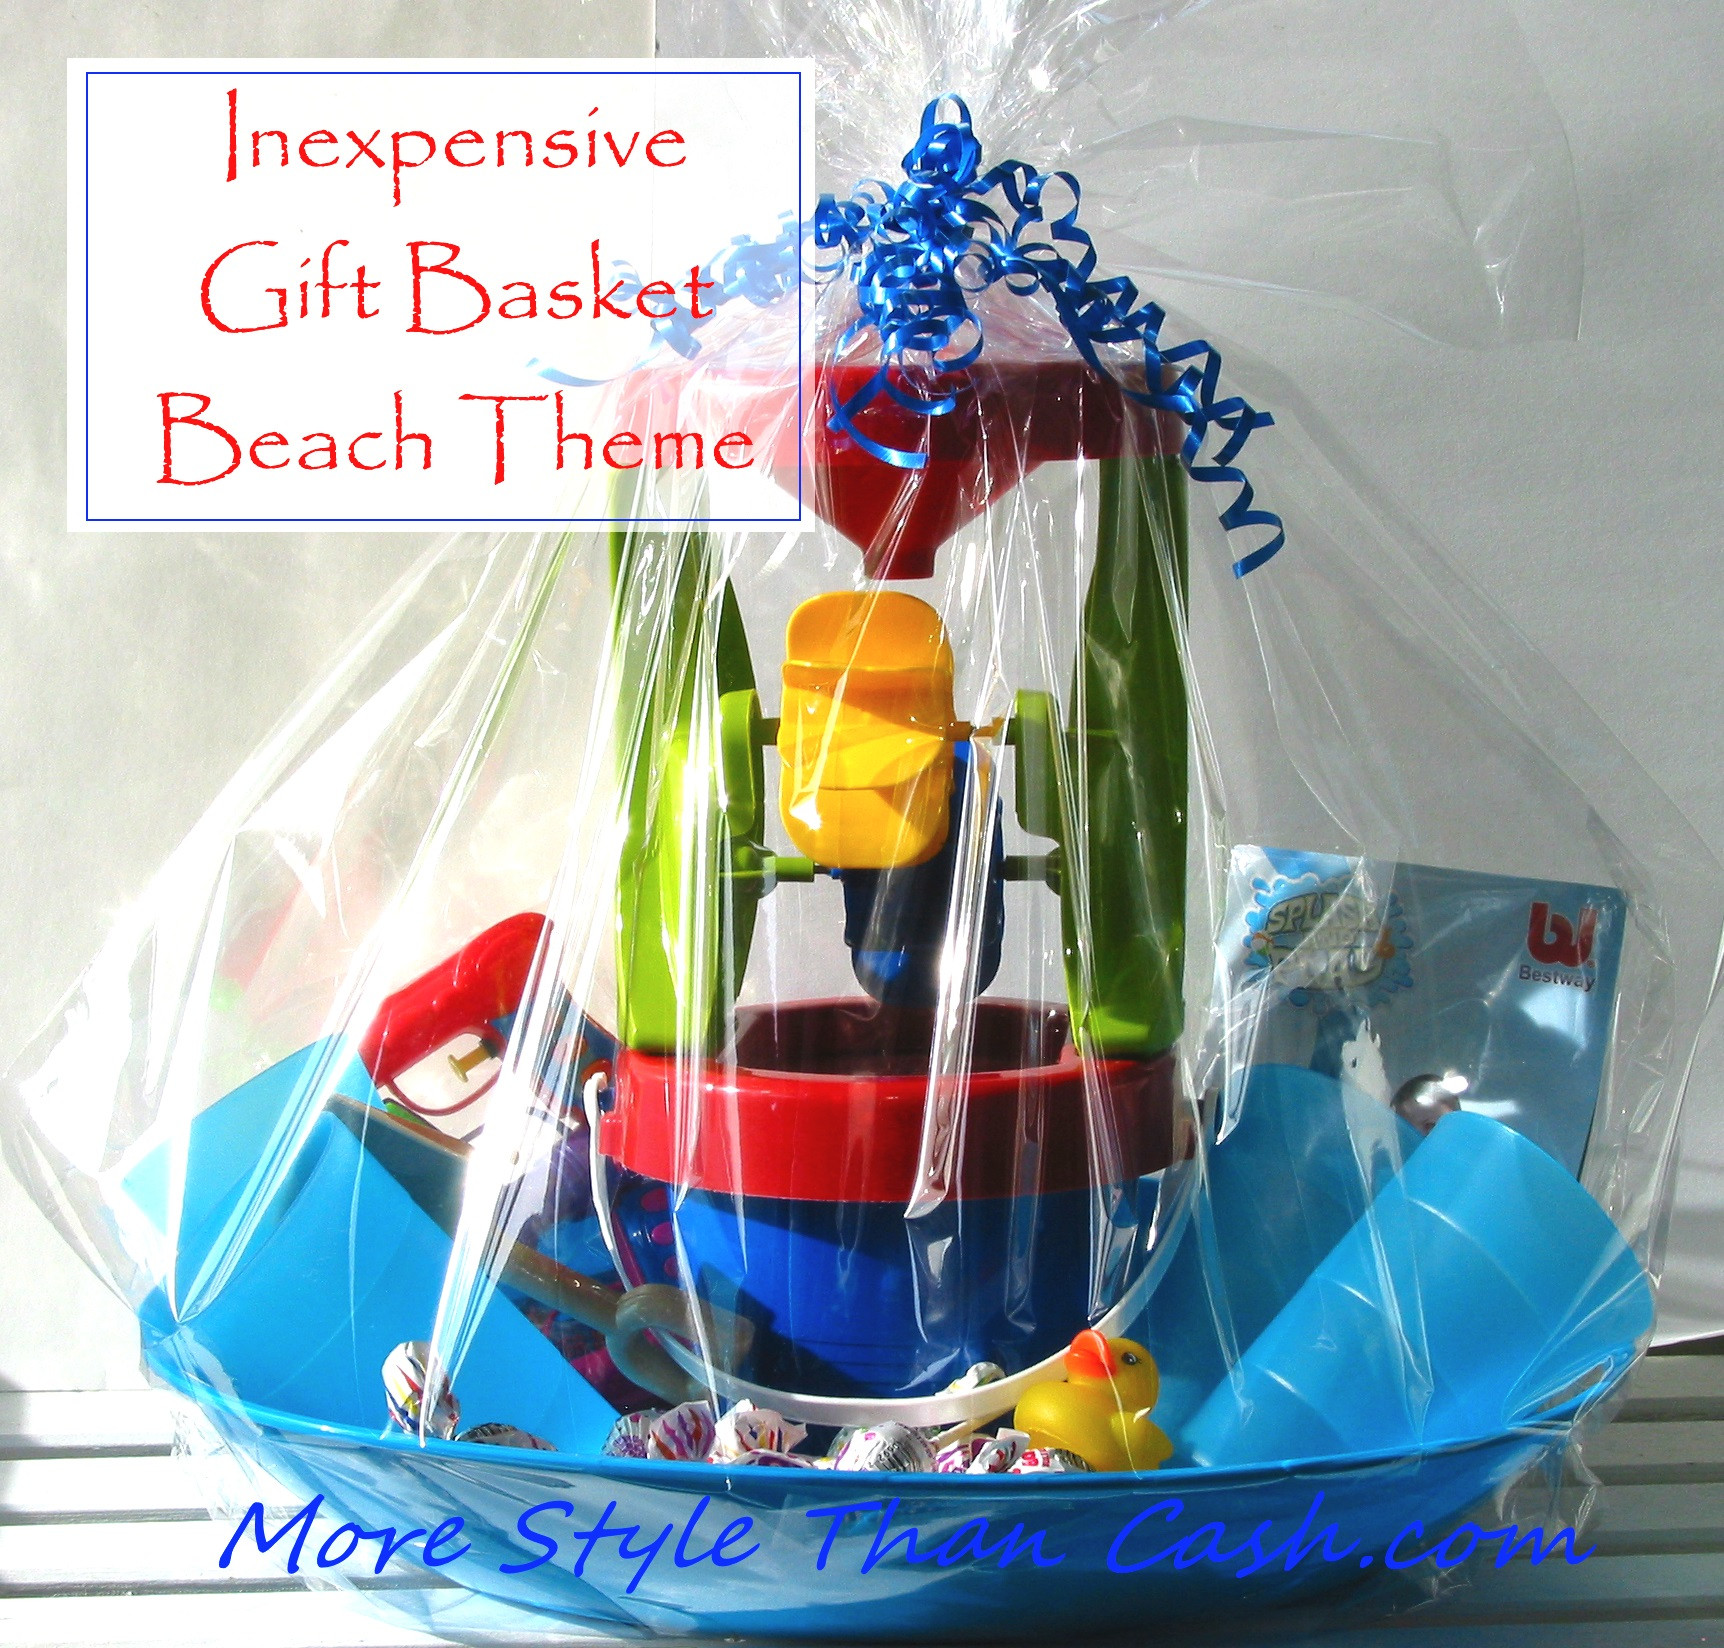 Beach Themed Gift Basket Ideas
 Inexpensive Gift Basket Beach Theme